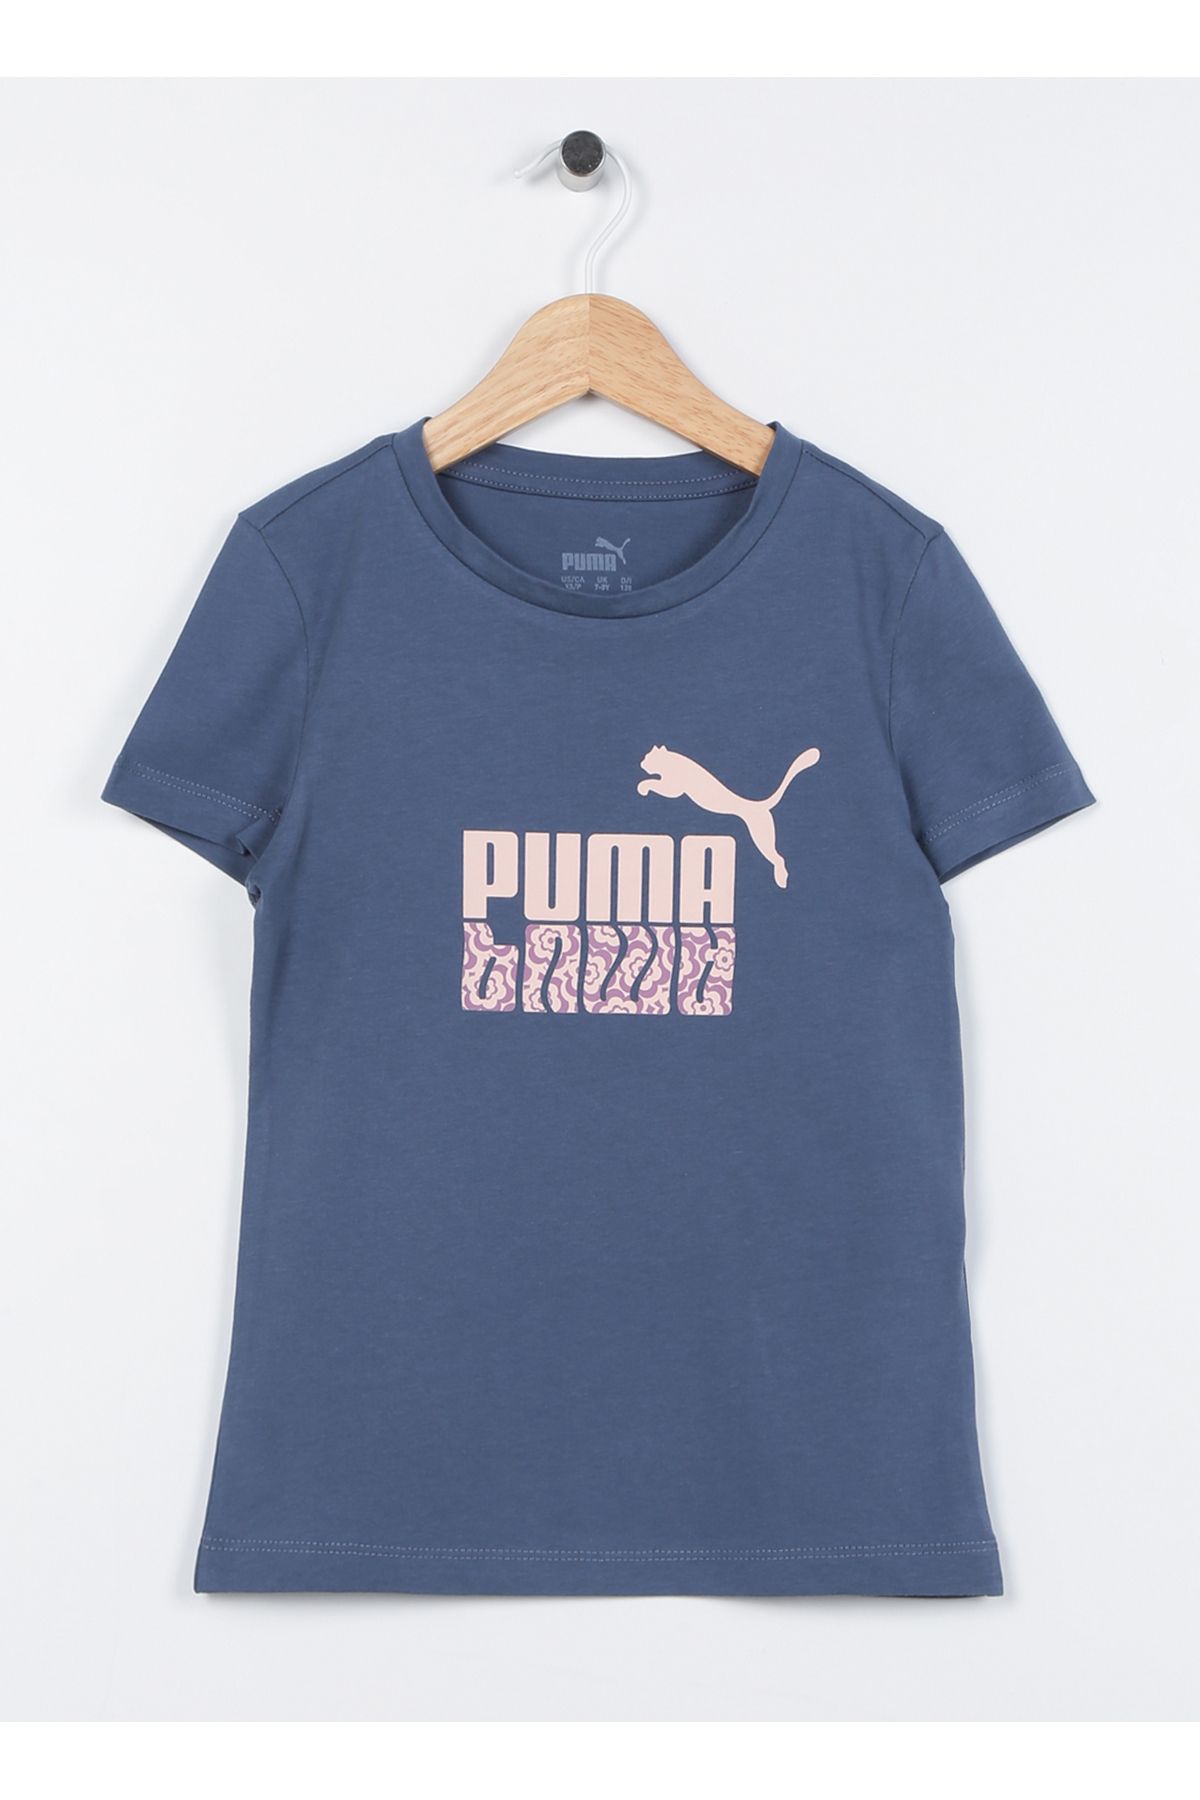 Puma Düz Lacivert Kız Çocuk T-shirt 68021301 Girl S Tee